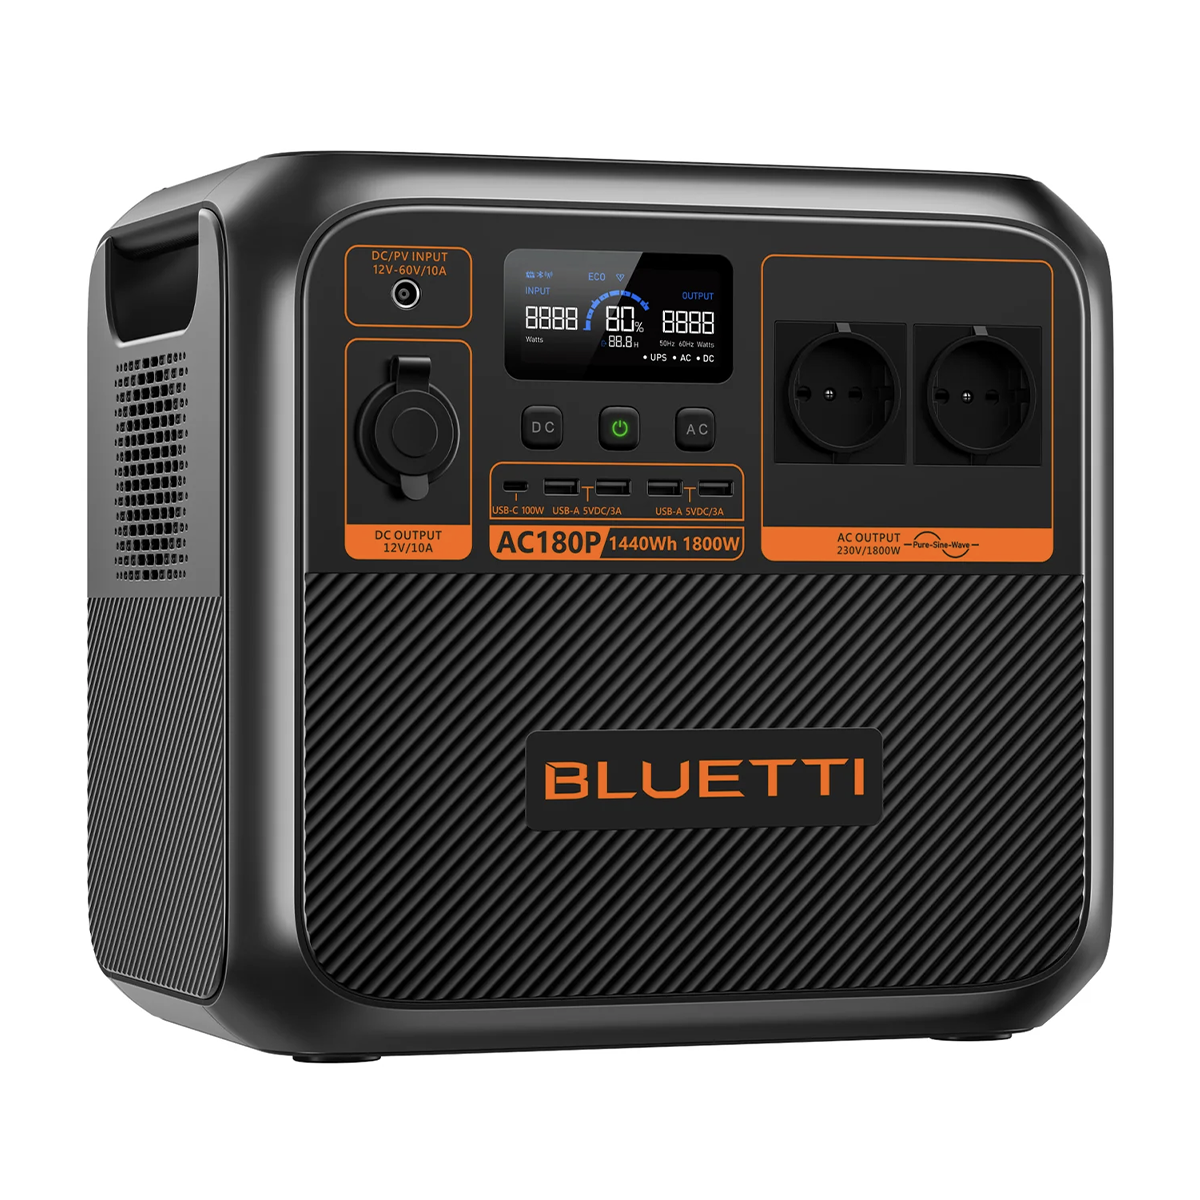 Портативная зарядная станция BLUETTI AC180P Portable Power Station | 1800W 1440Wh